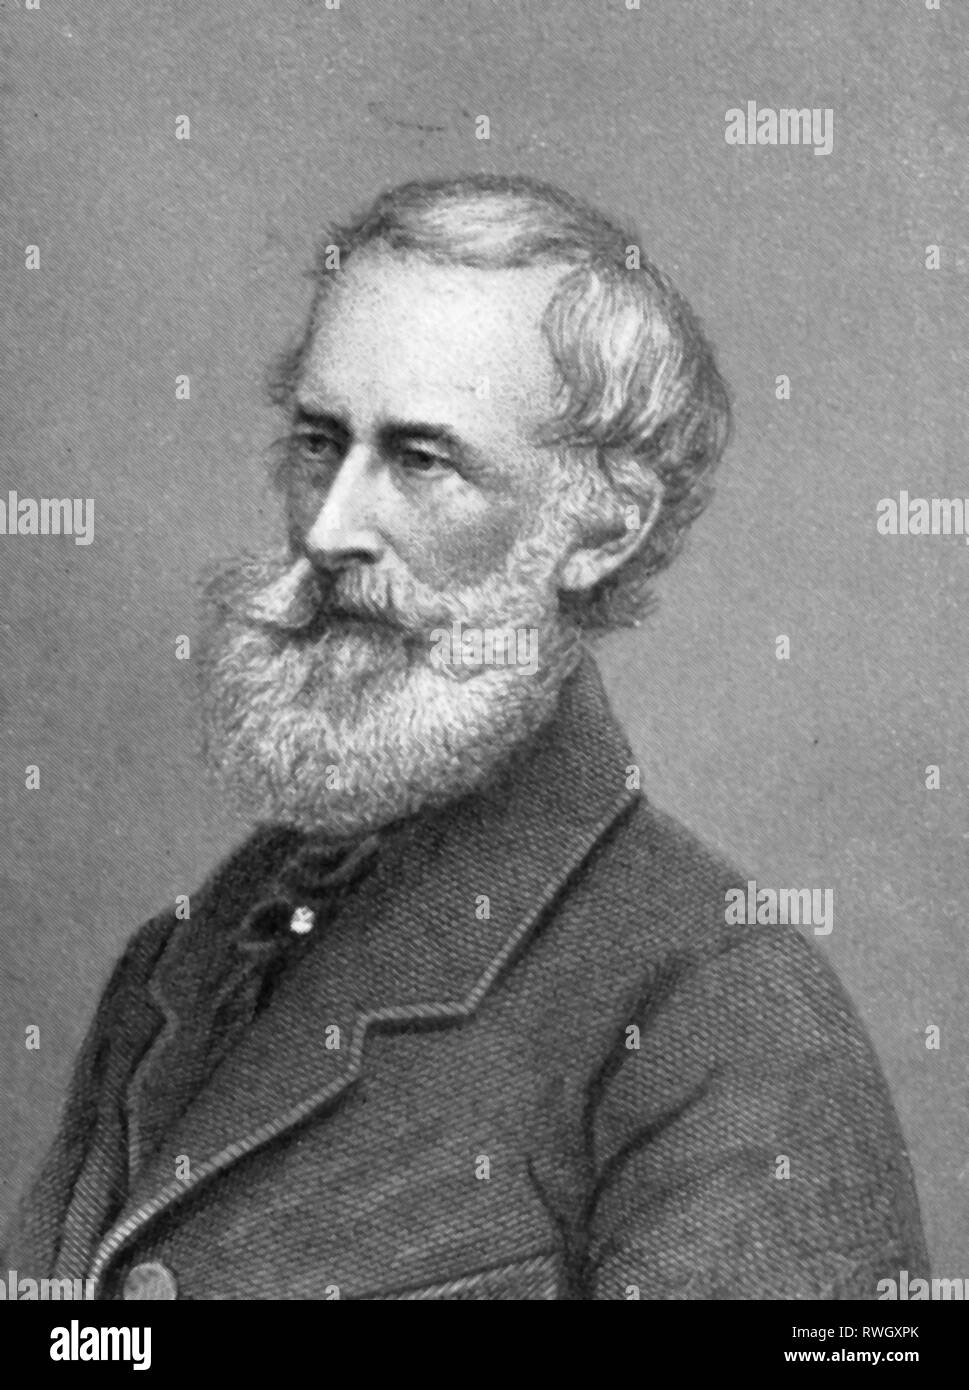 Krupp, Alfred, 11.4.1812 - 14.7.1887, l'industriel allemand, portrait, gravure sur bois, vers 1880, Additional-Rights Clearance-Info-Not-Available- Banque D'Images